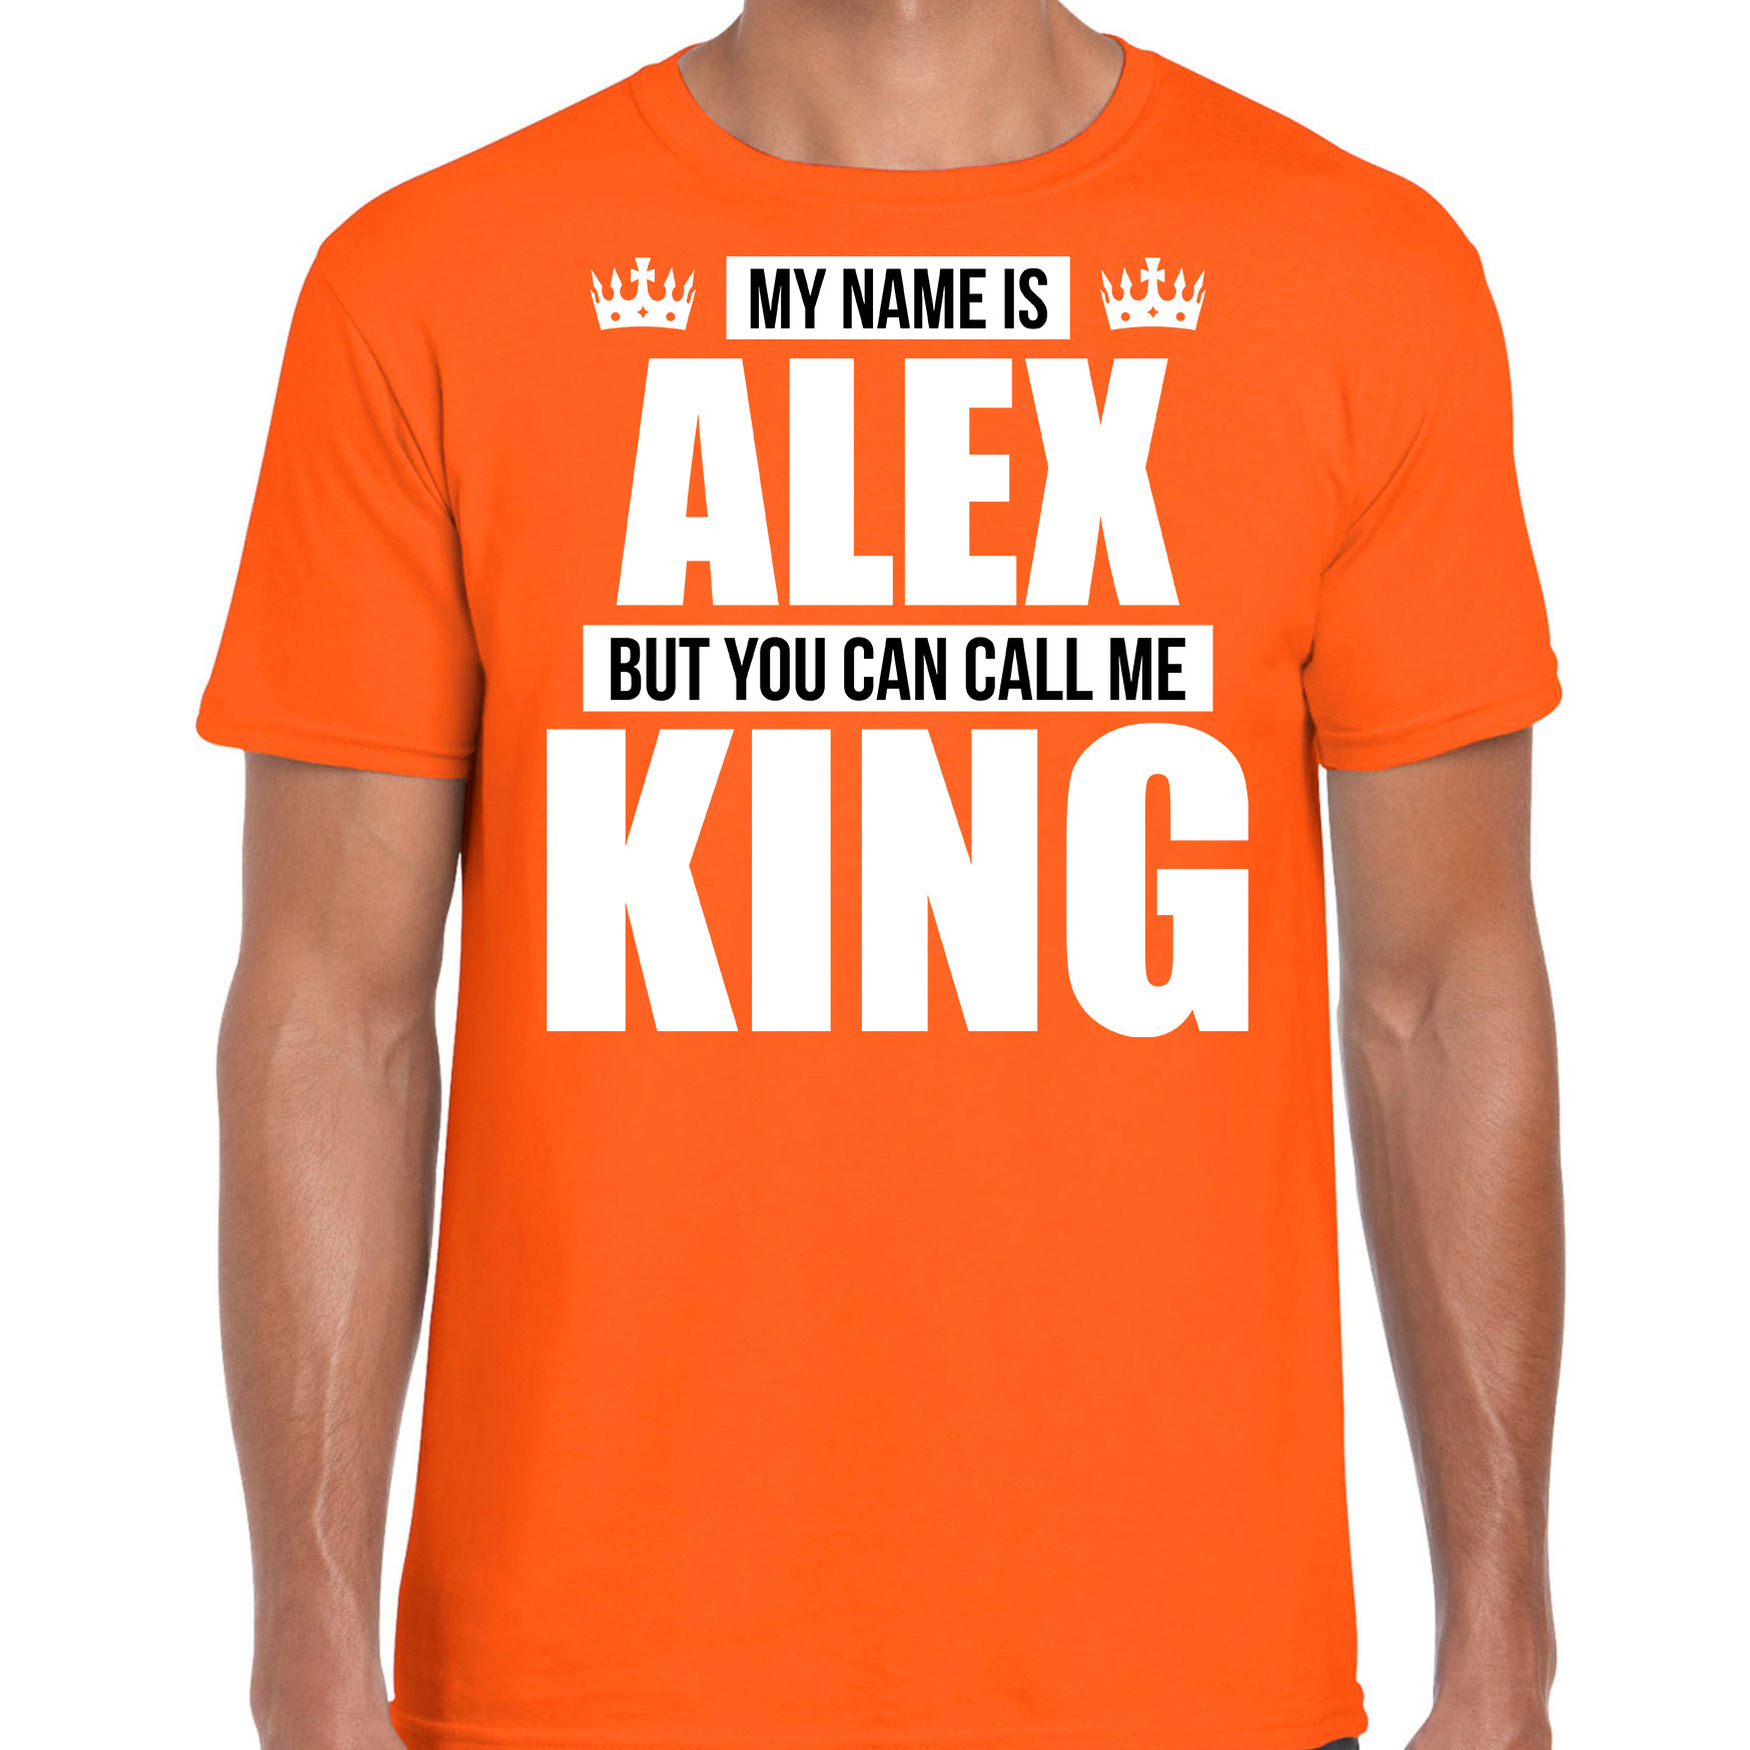 Naam My name is Alex but you can call me King shirt oranje cadeau shirt